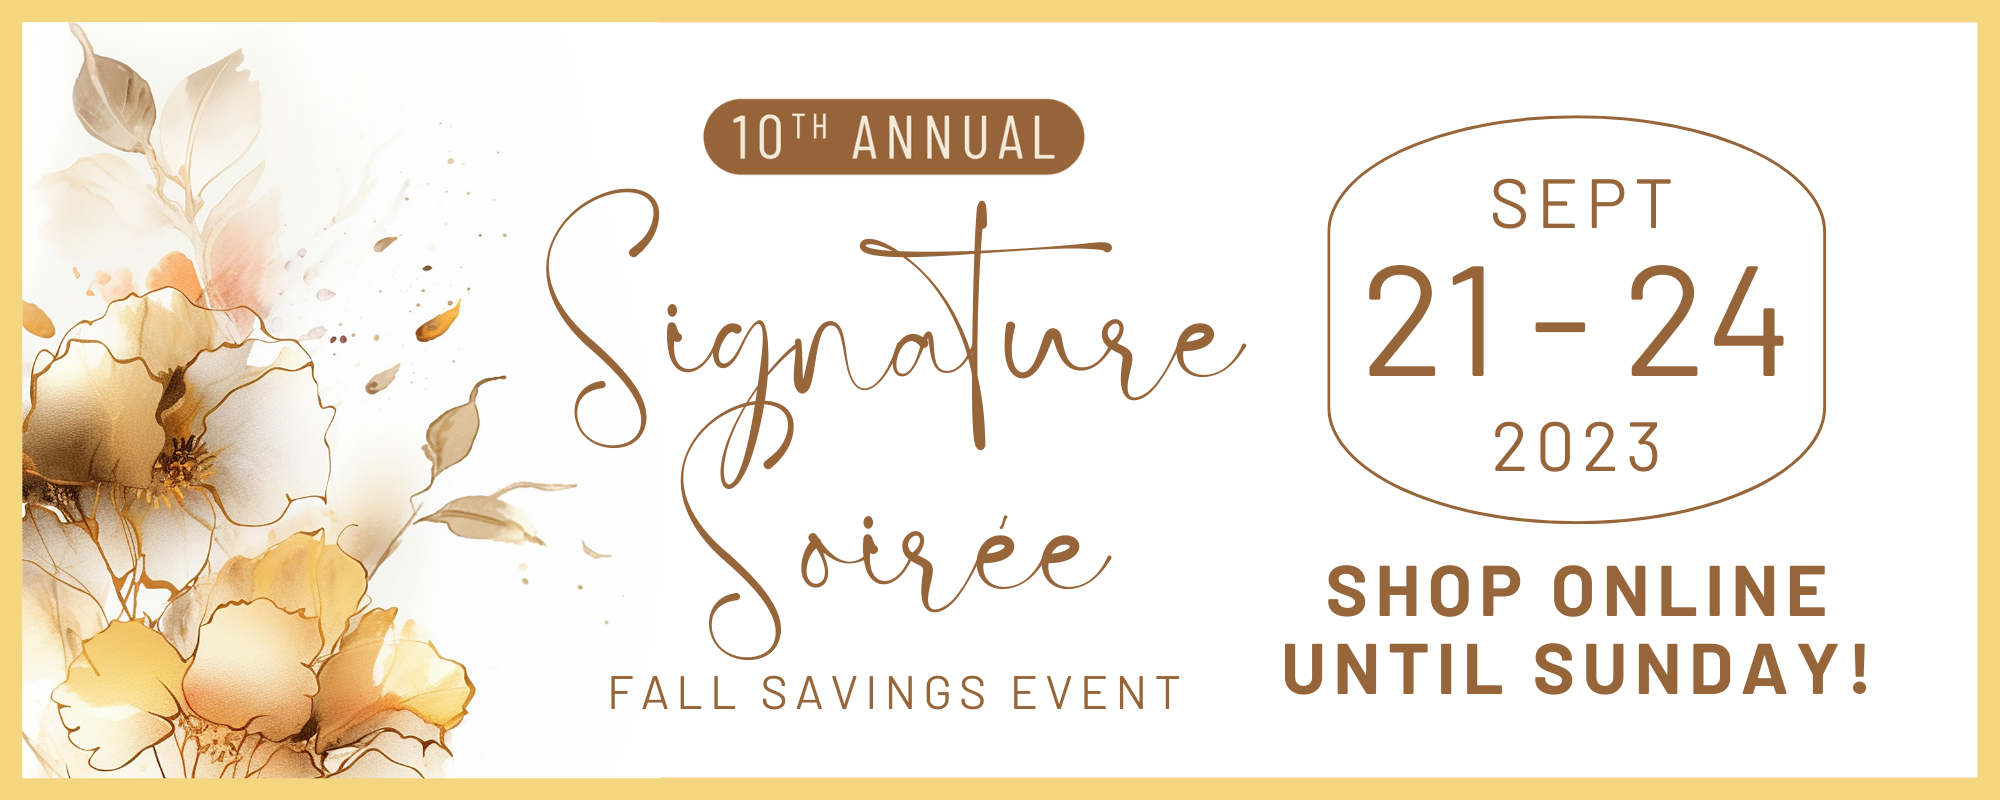 Fall Savings event 2023 - Savings end Sunday!